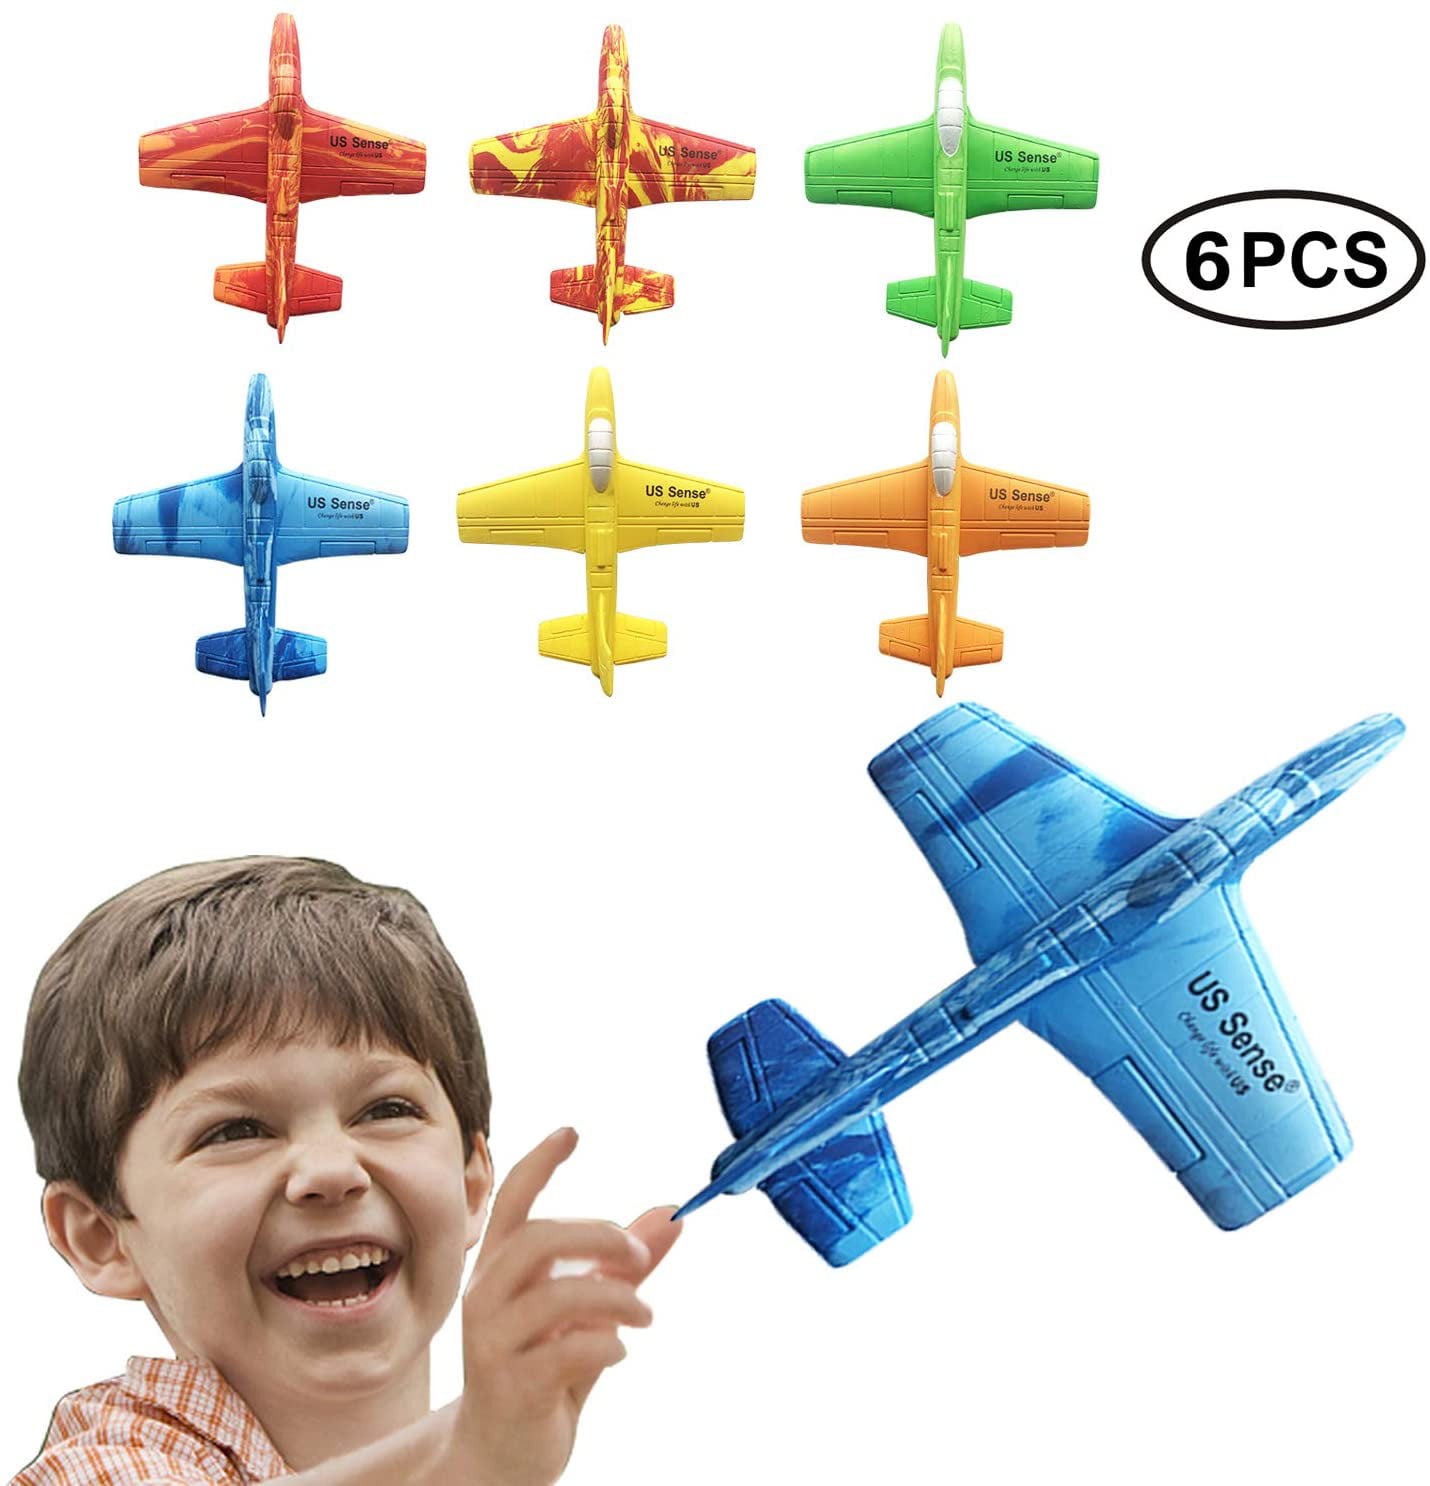 battle plane toy